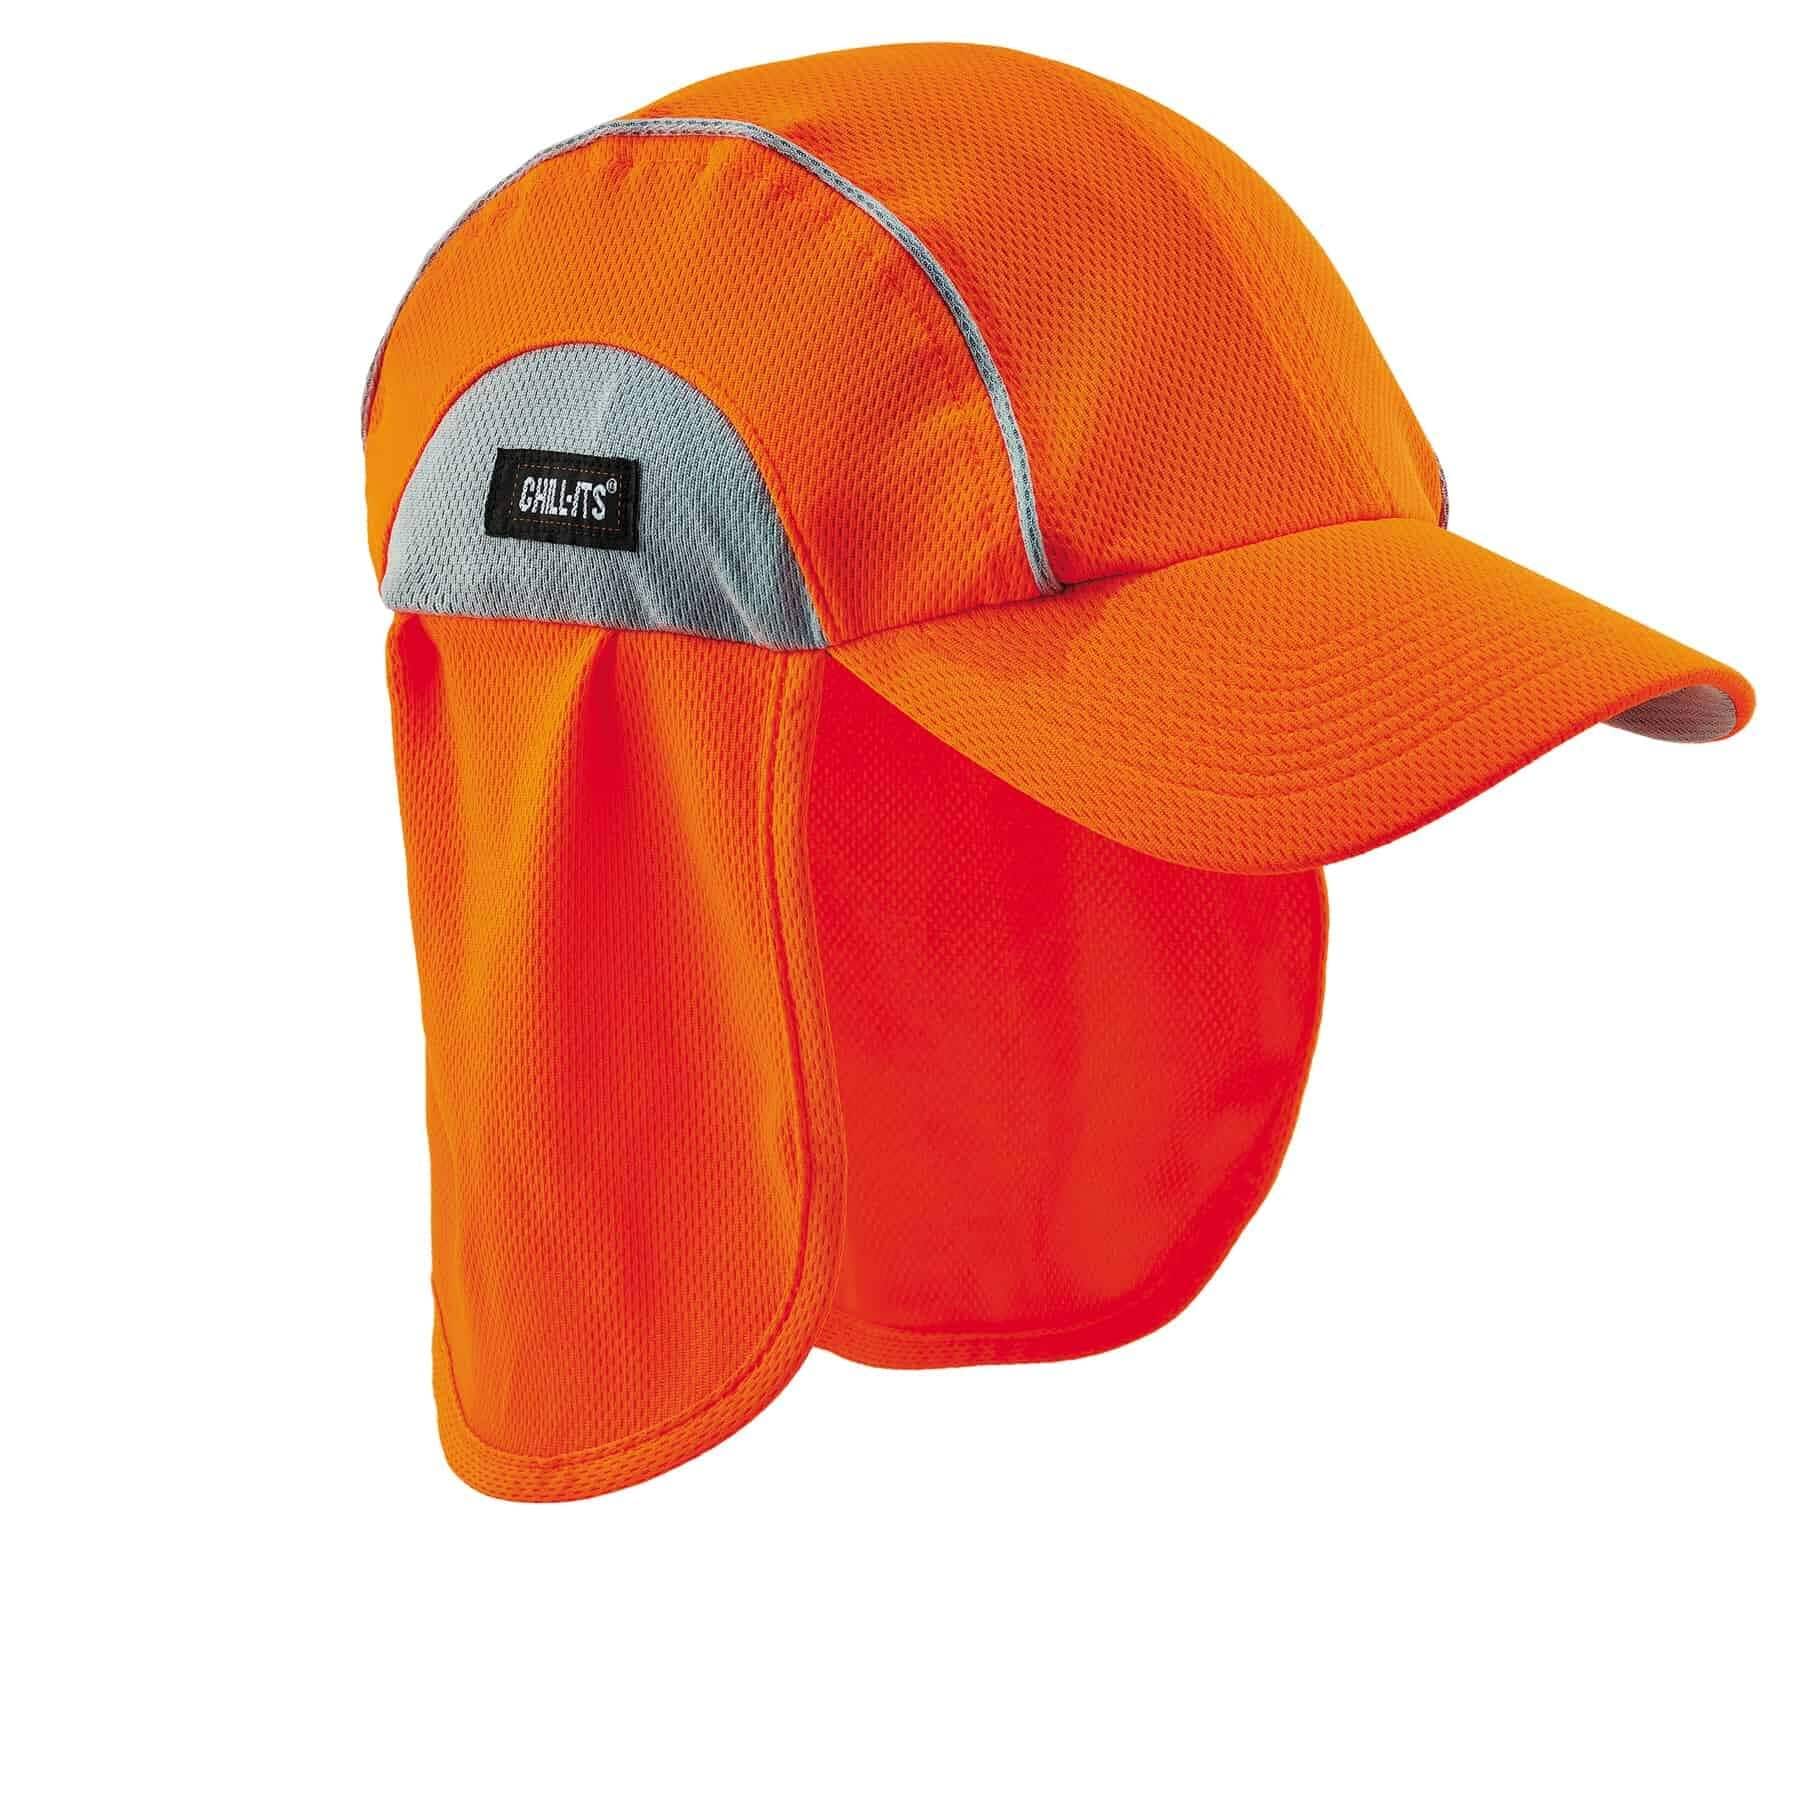 Ergodyne Chill-Its Orange High Performance Hat with Neck Shade - Orange